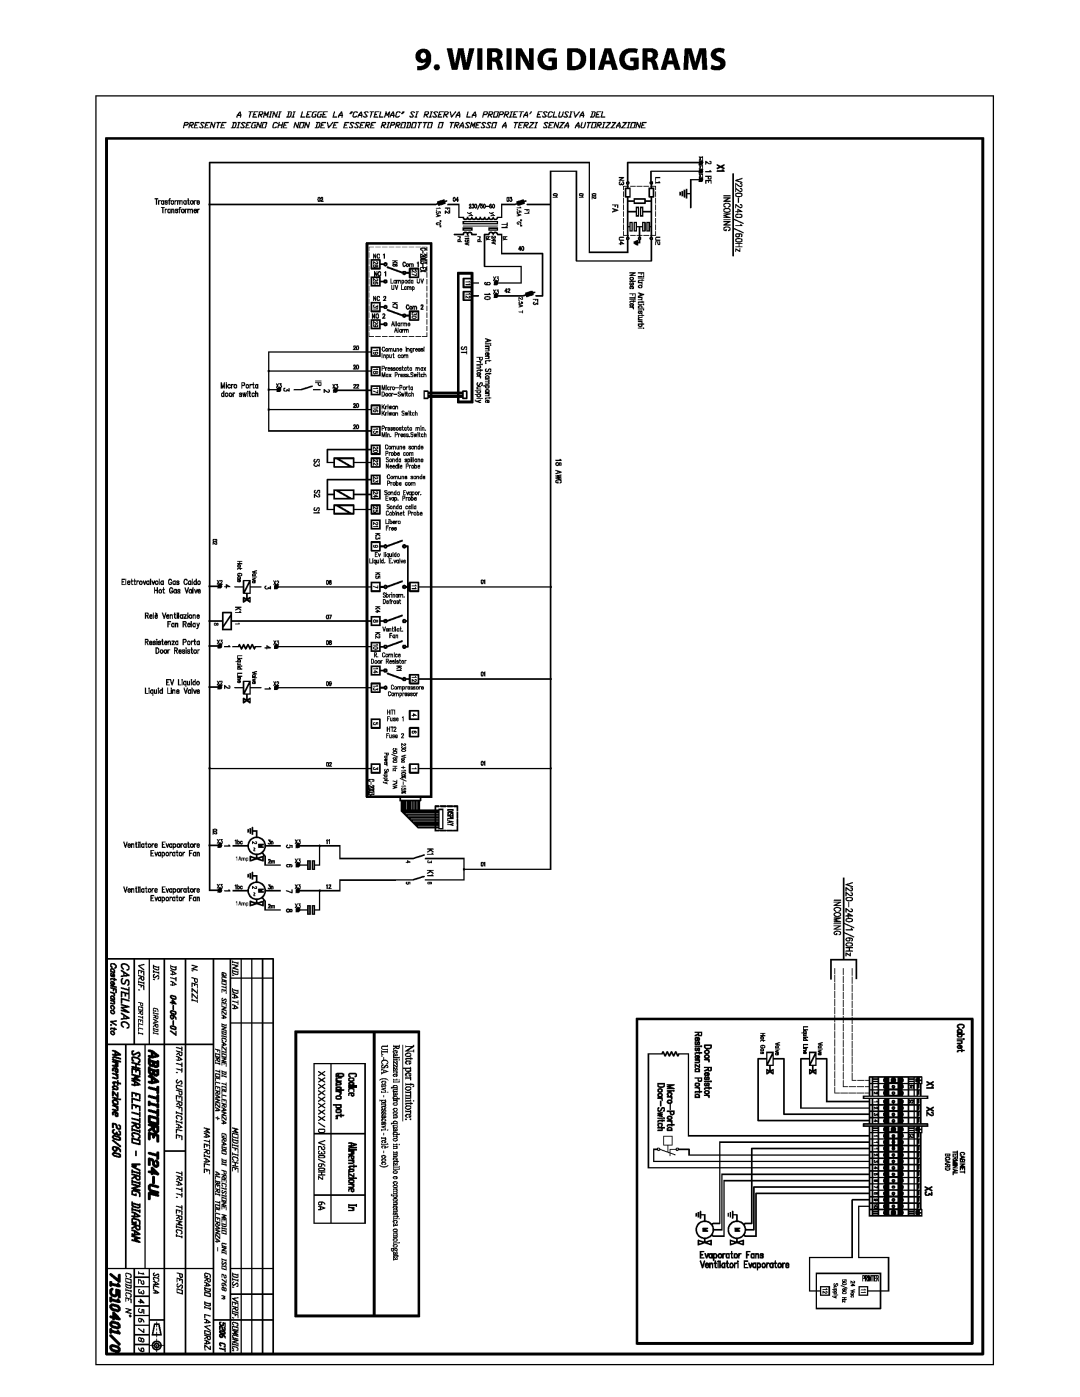 Delfield T24C, T20C, T40, T5, T14D manual wiring diagrams 